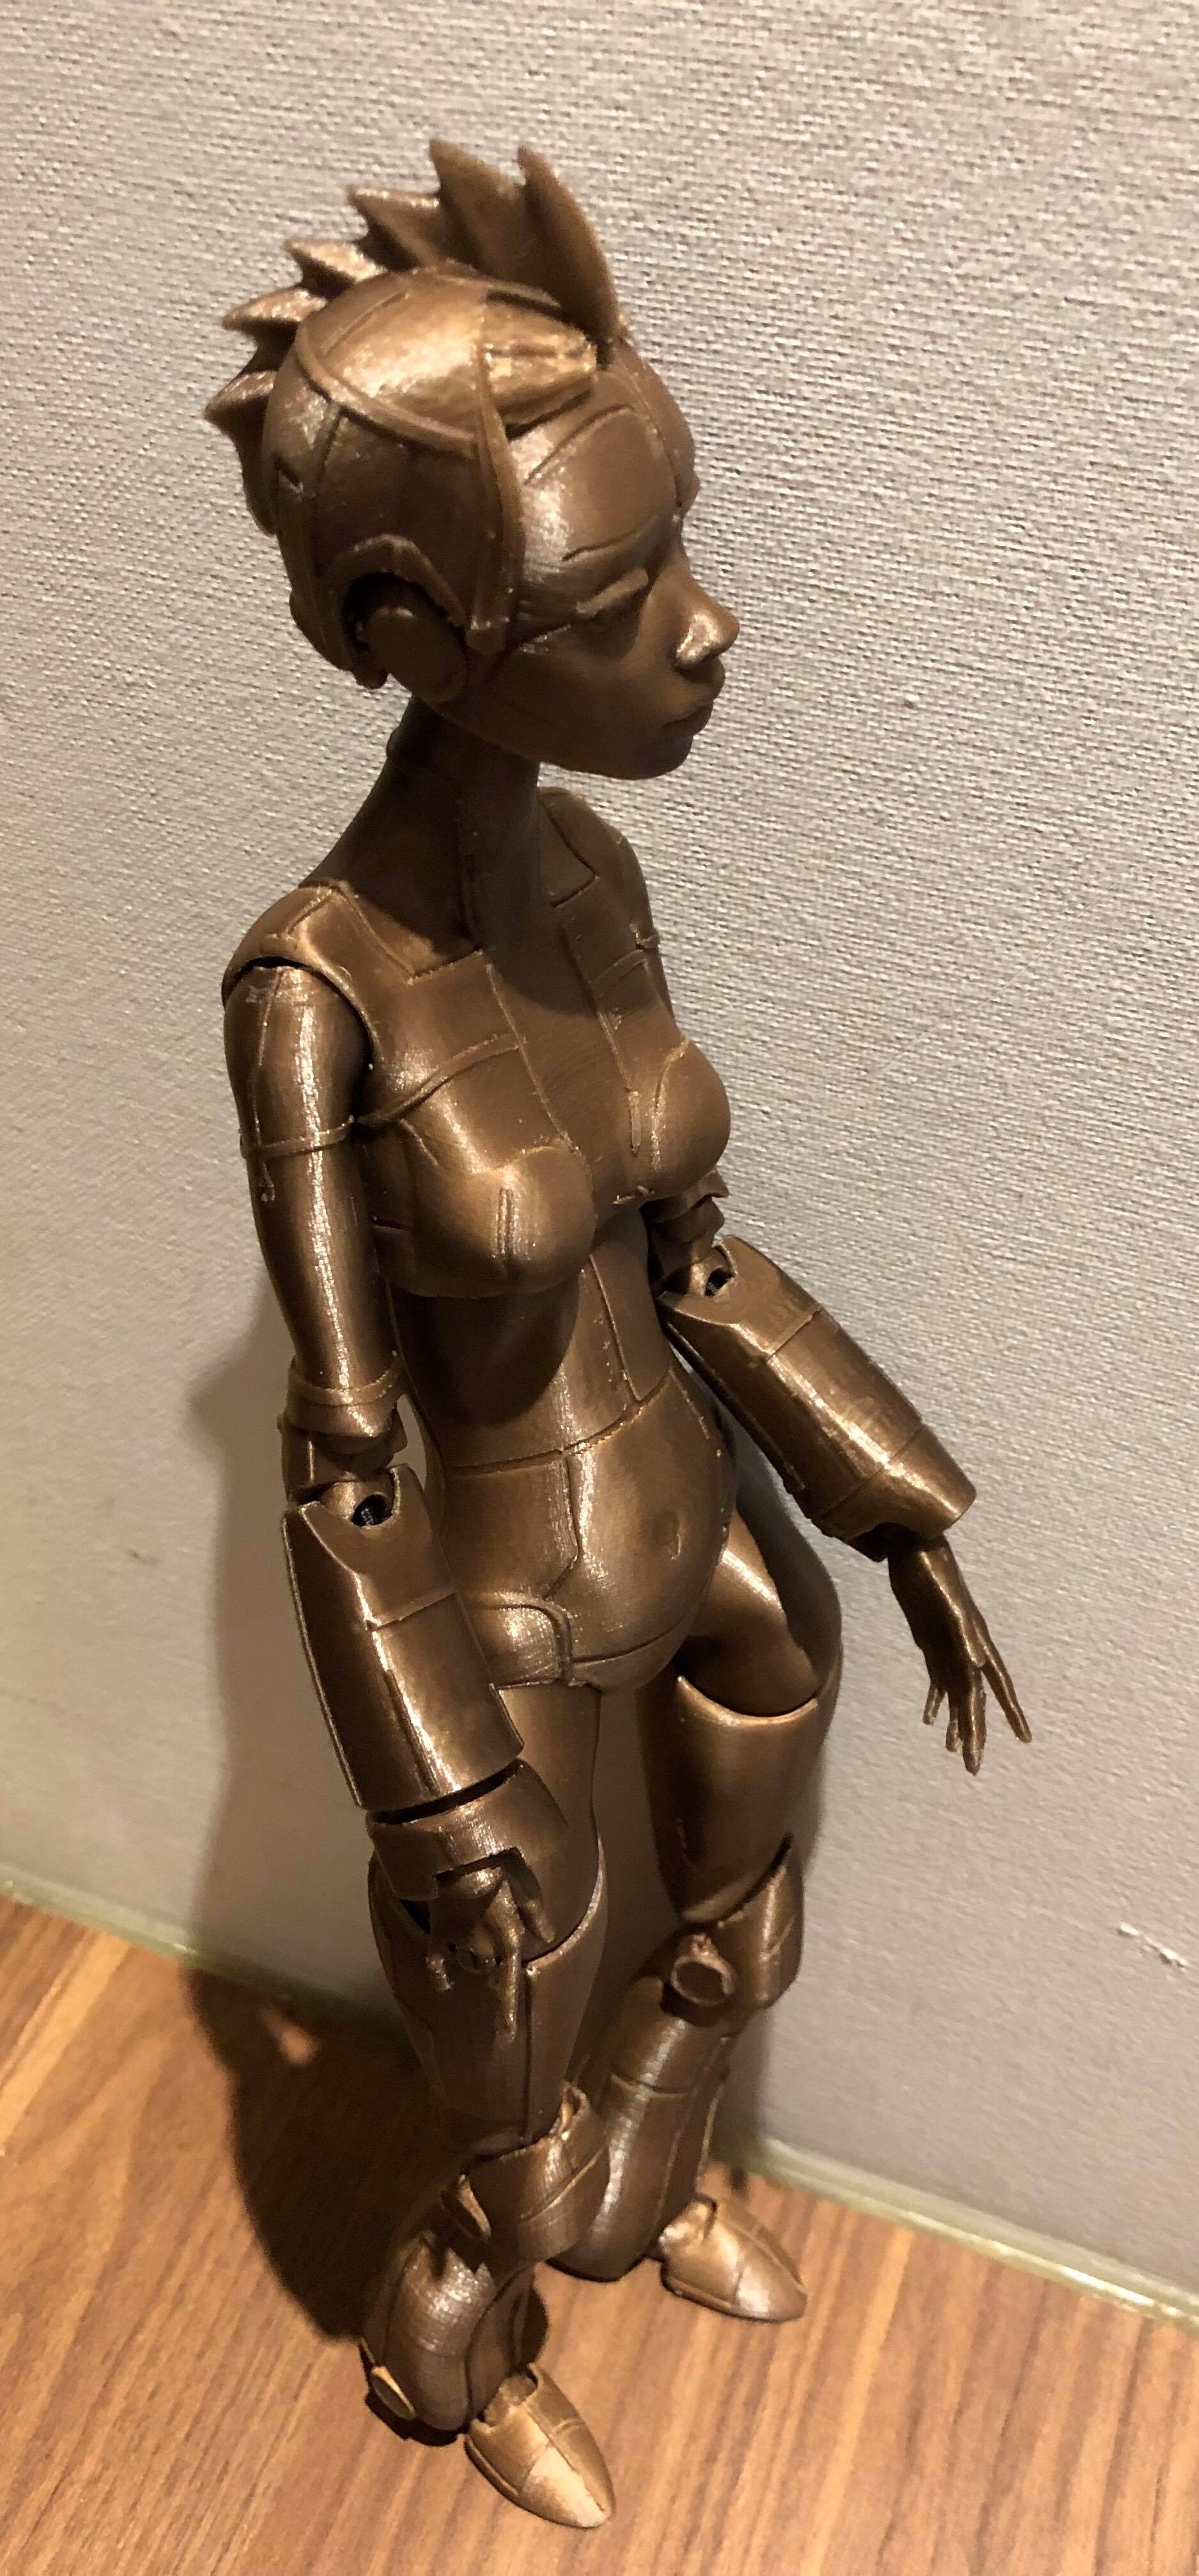 3D Printable "Robotica" BJD Doll by Sonia Verdu